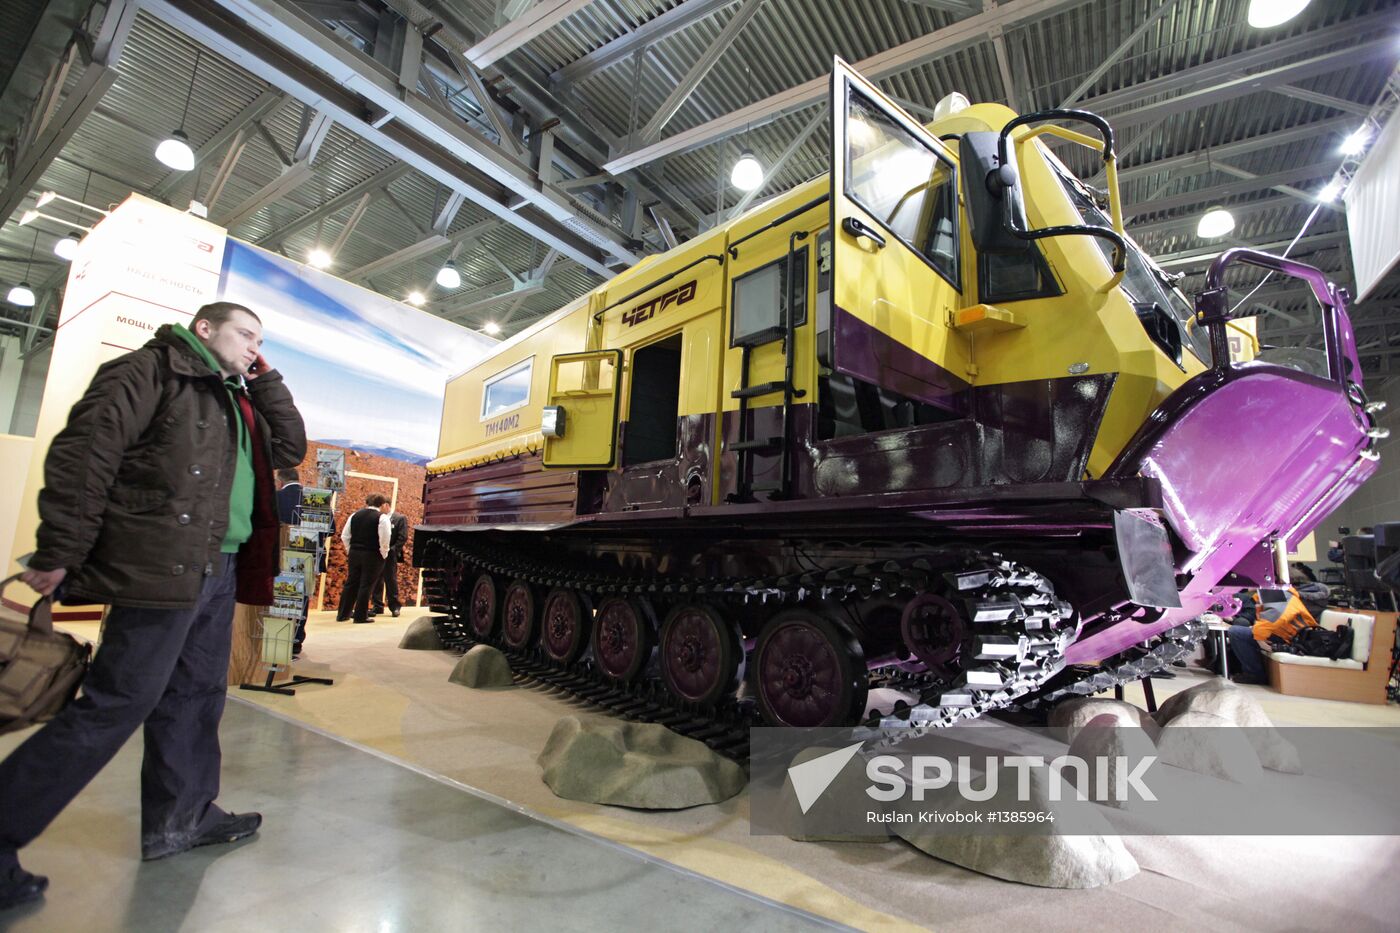 Vezdekhod, exhibition of all-terrain vehicles